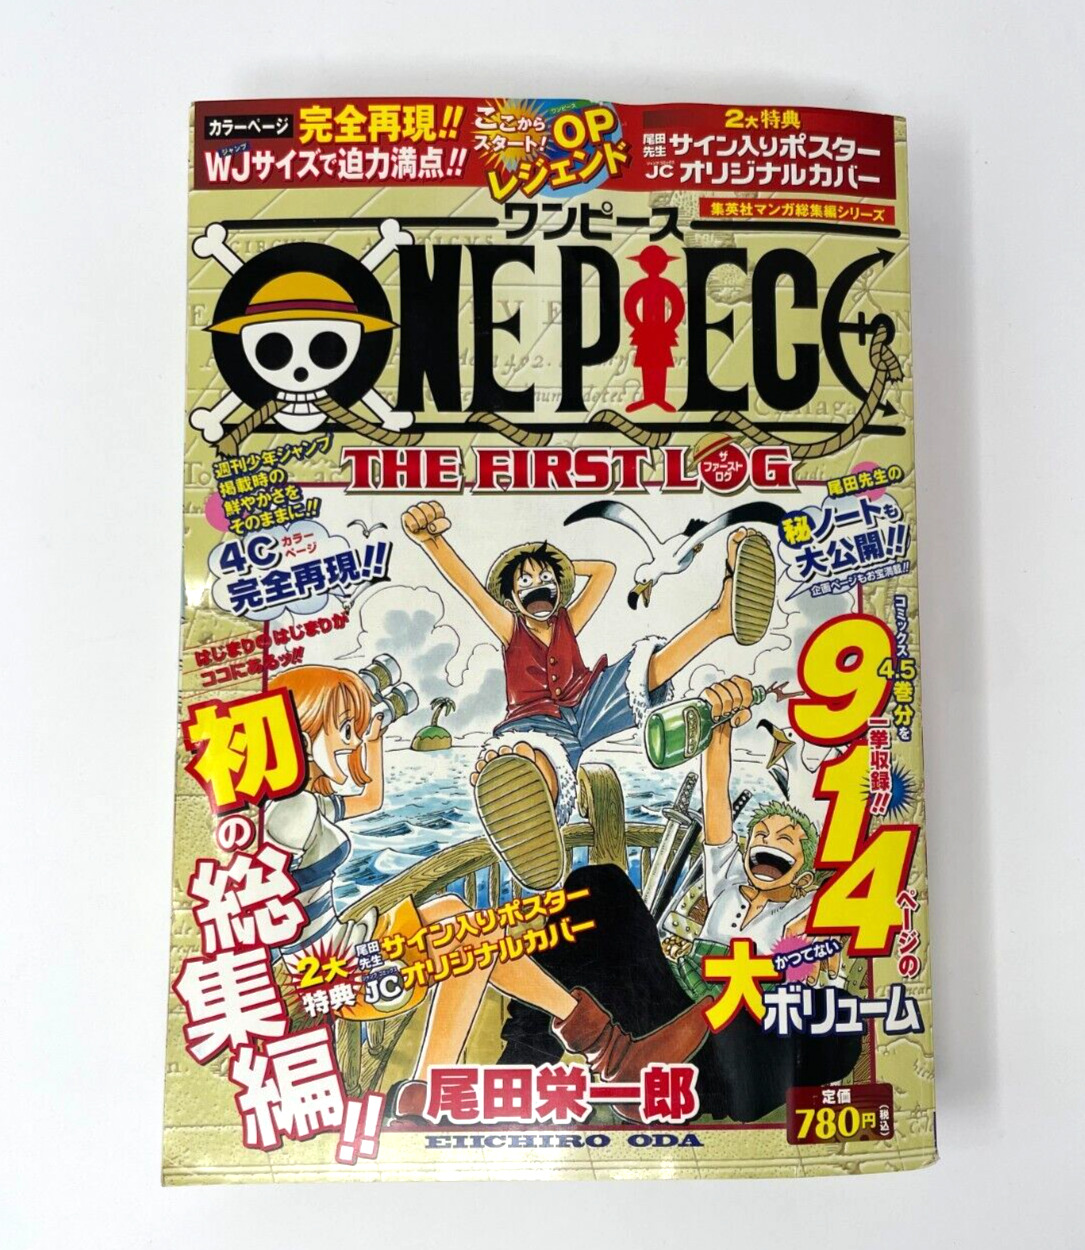 ONE PIECE - THE FIRST LOG - Shueisha Omnibus Manga EIICHIRO ODA Rare Japanese